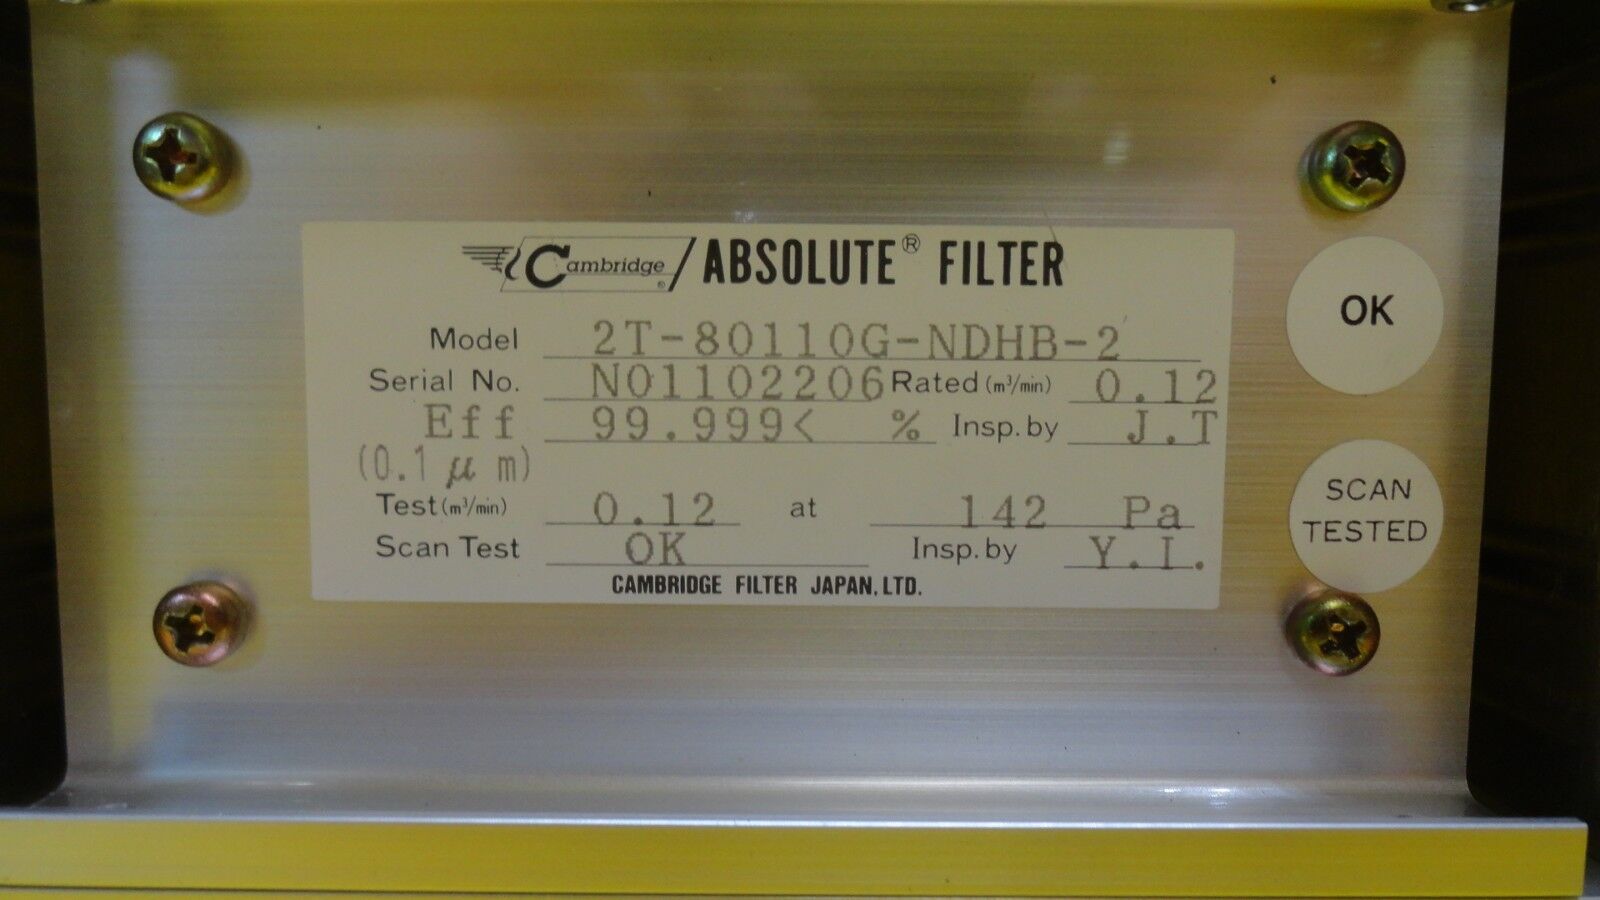 Cambridge 2T-80110G-NDHB-2 Filter ABSOLUTE Nikon NSR-S205C Used Working